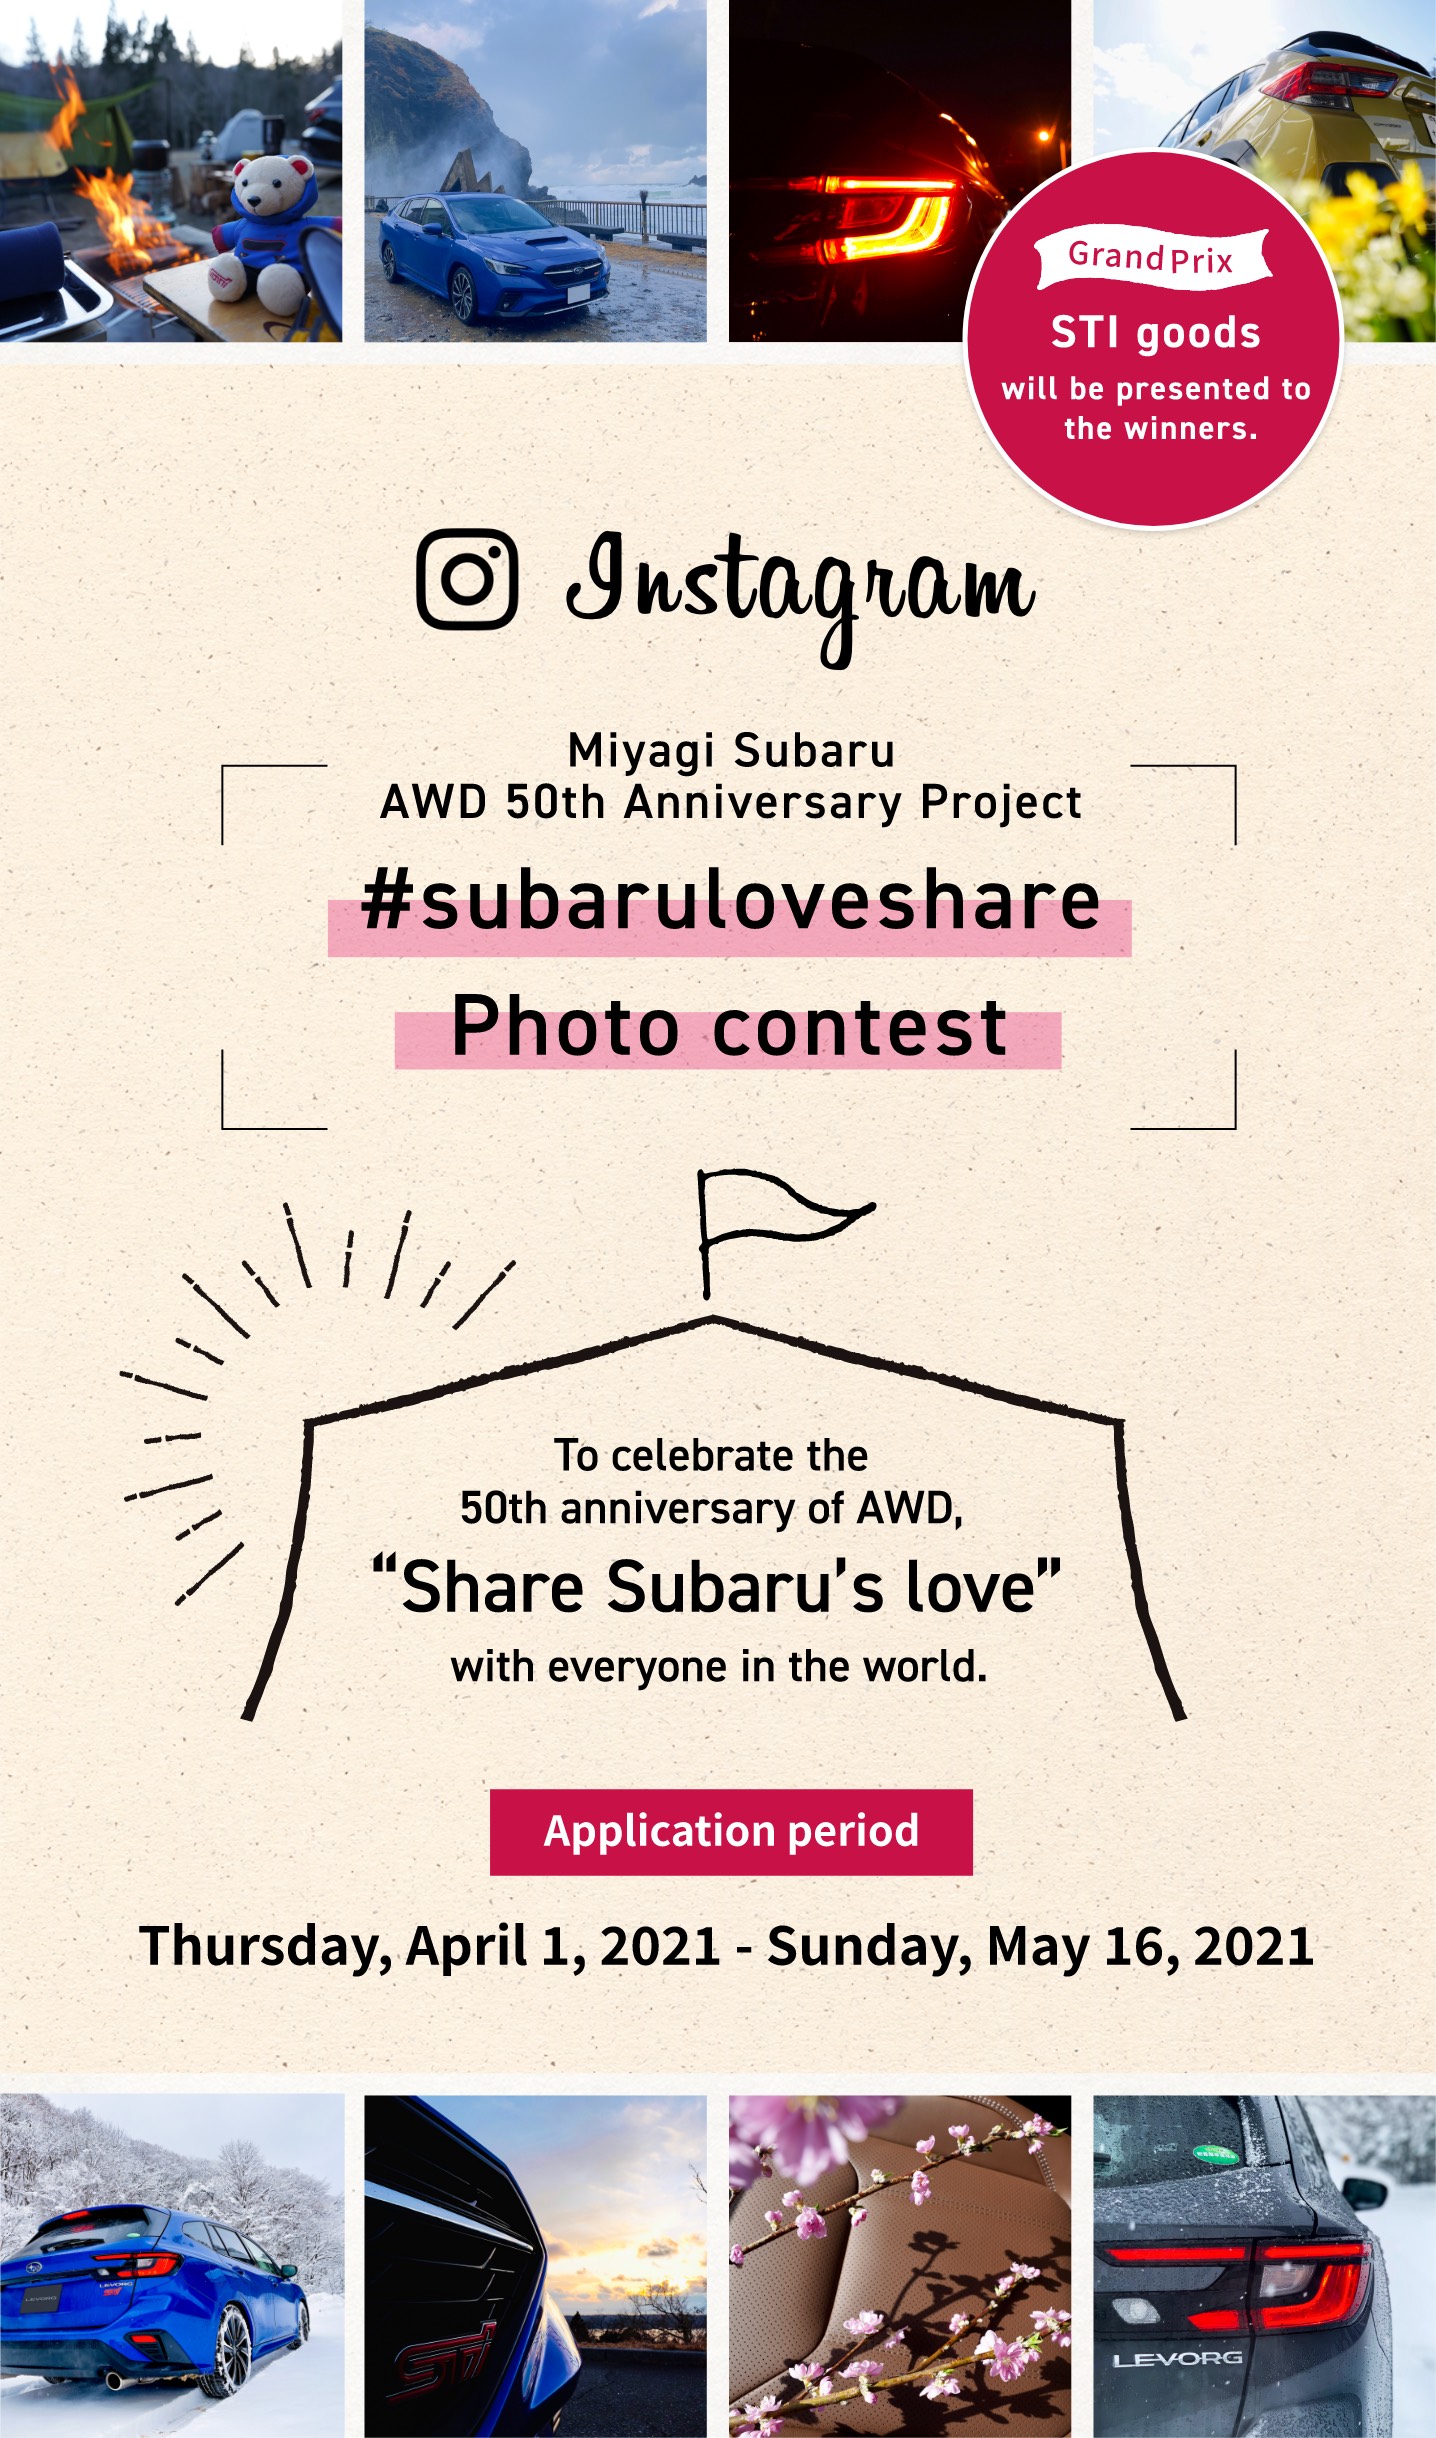 Miyagi SubaruAWD 50th Anniversary Project. Share Subaru’s love photo contest